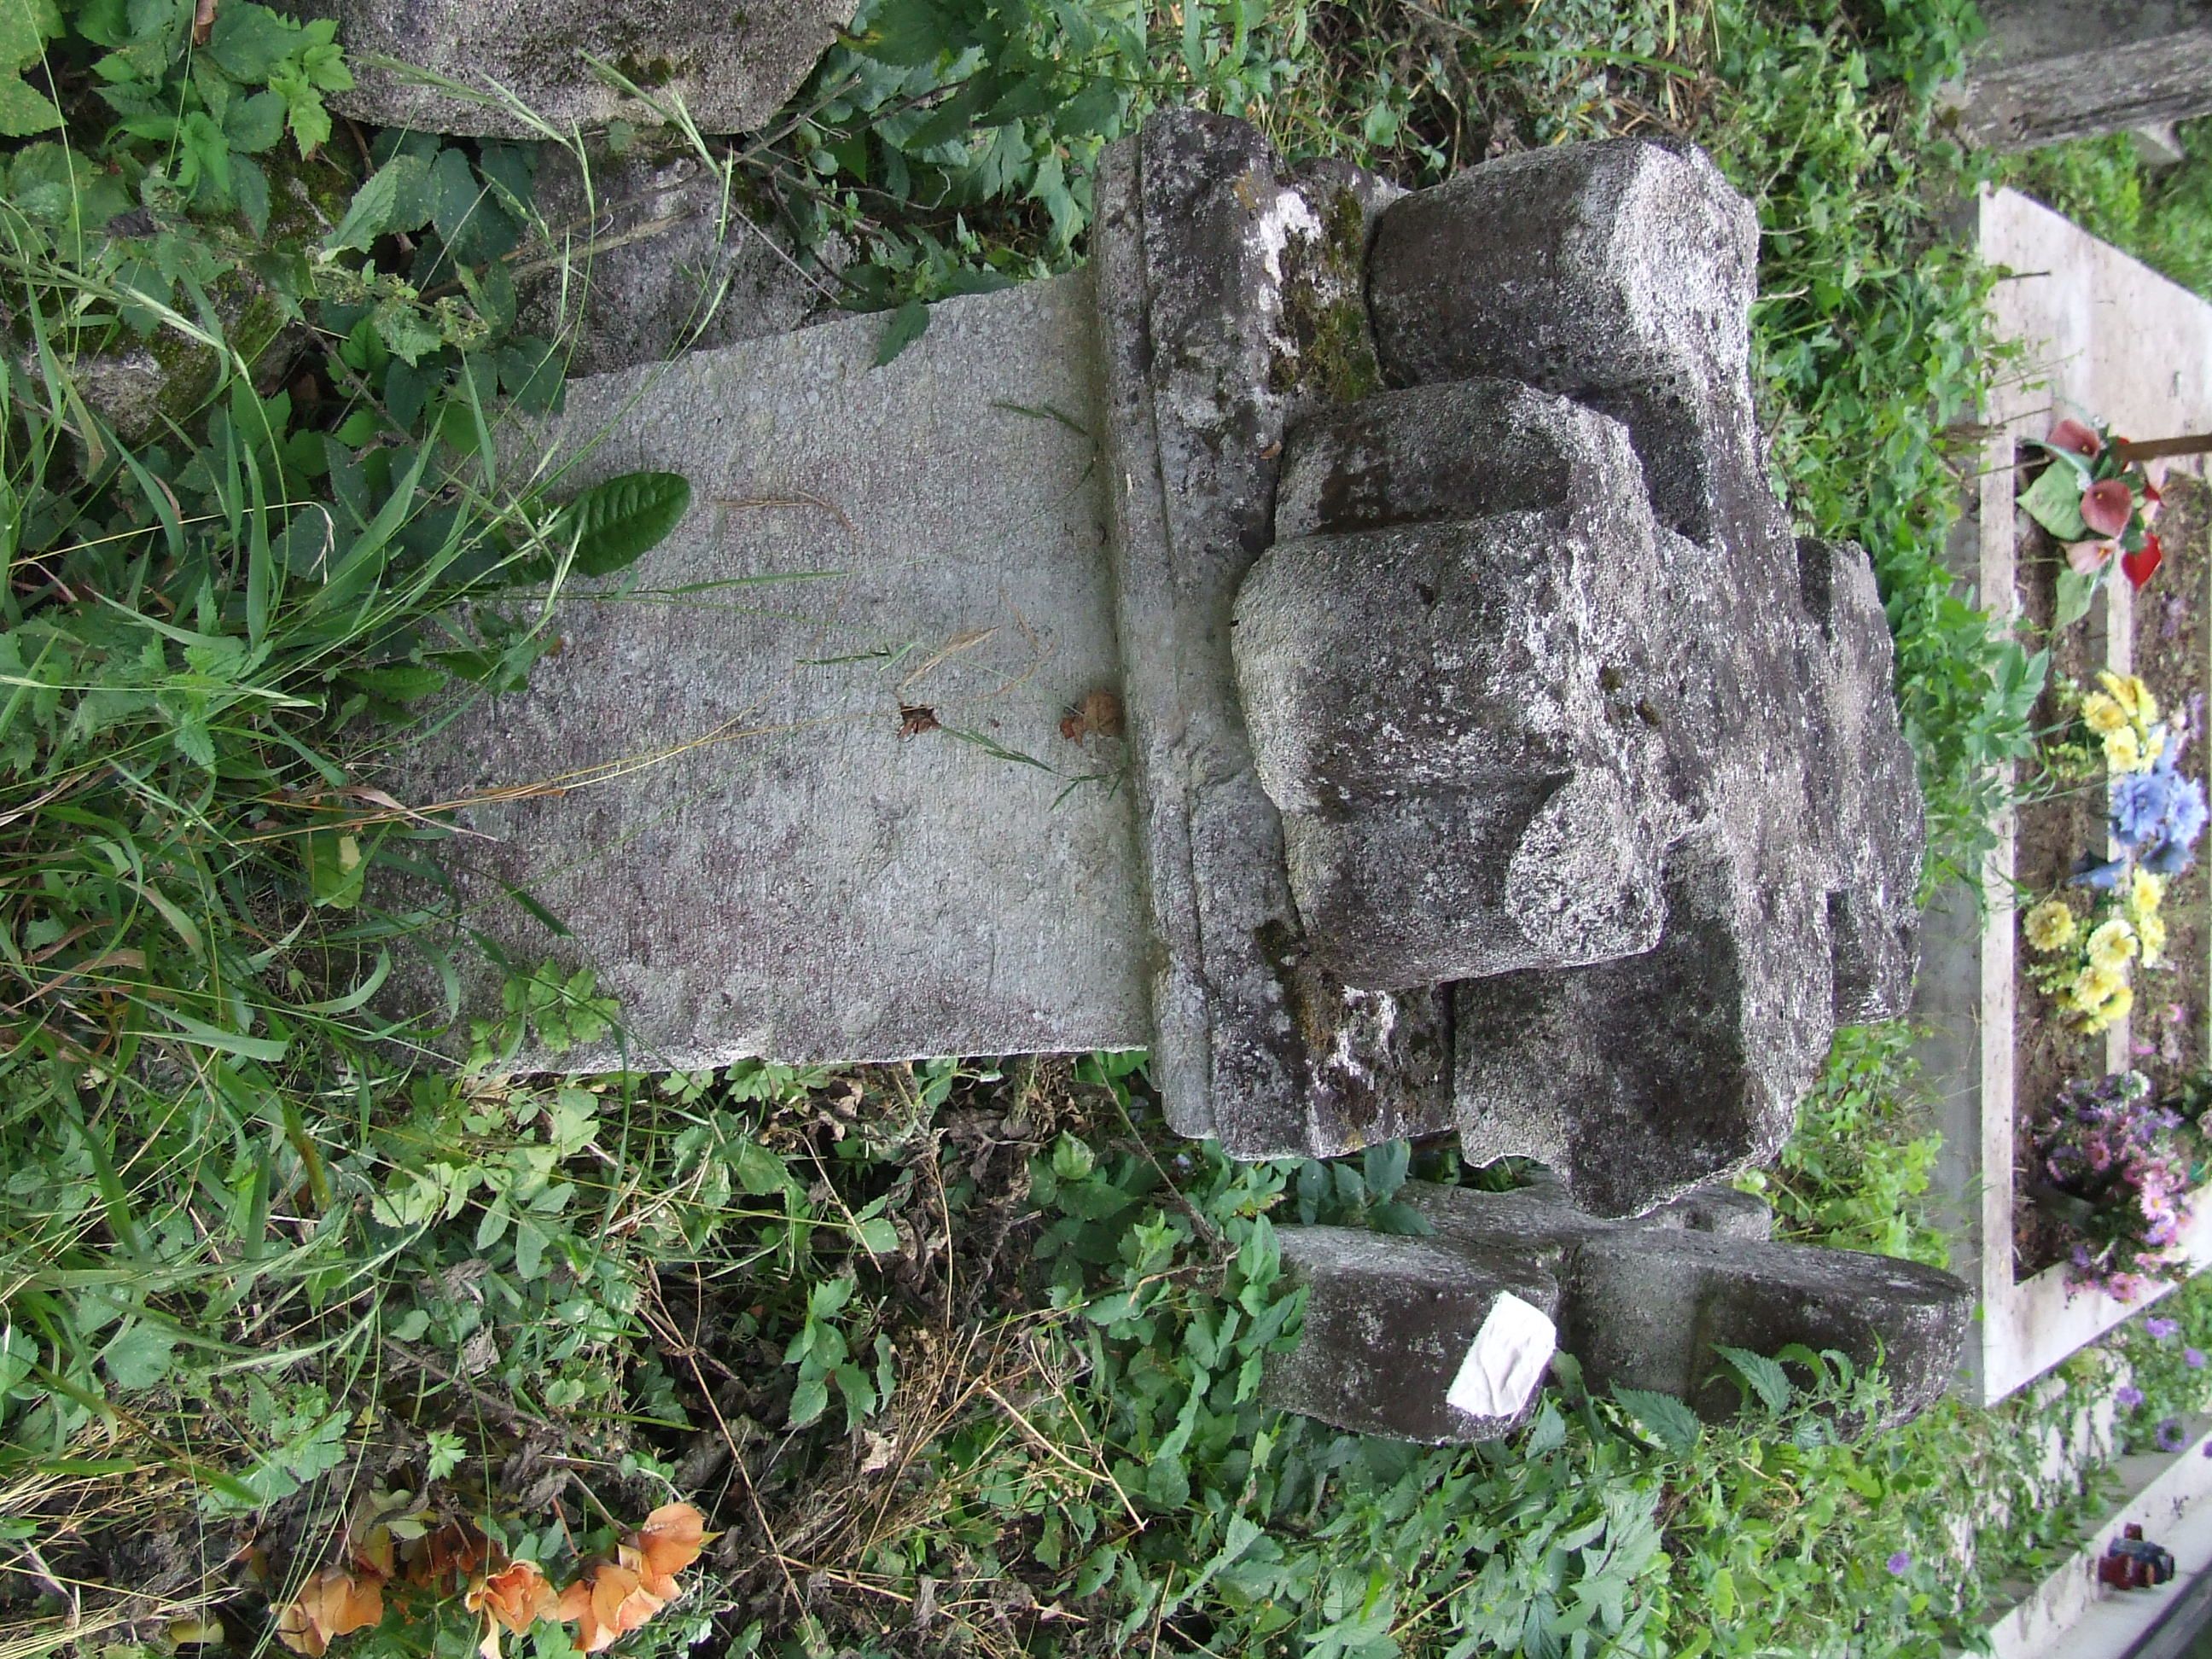 Tombstone of Maria Glebocka and Zofia Tarczynska, as of 2007